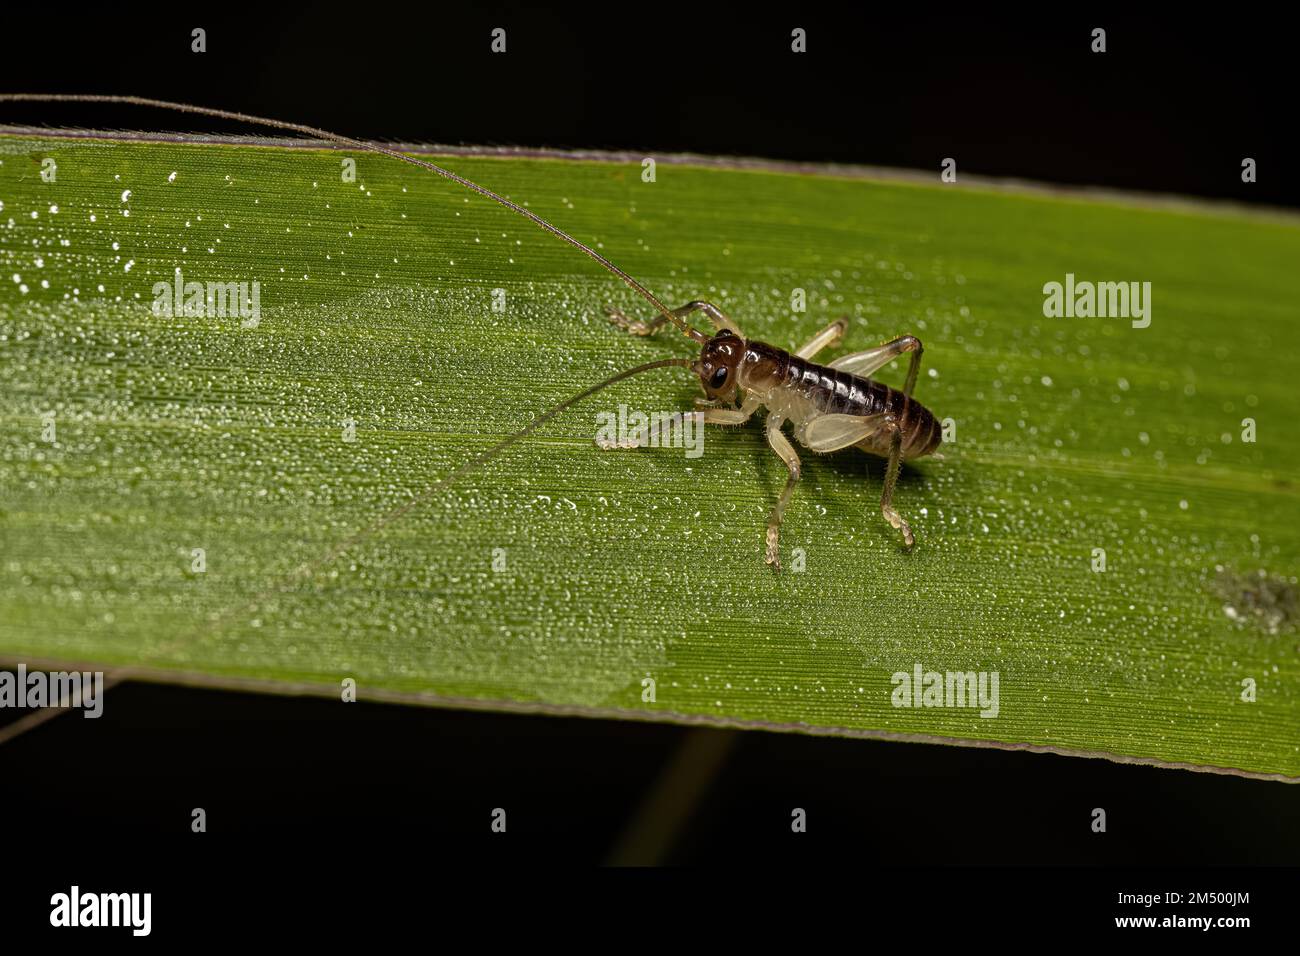 Raspy Cricket Nymph of the Family Gryllacrididae Stock Photo